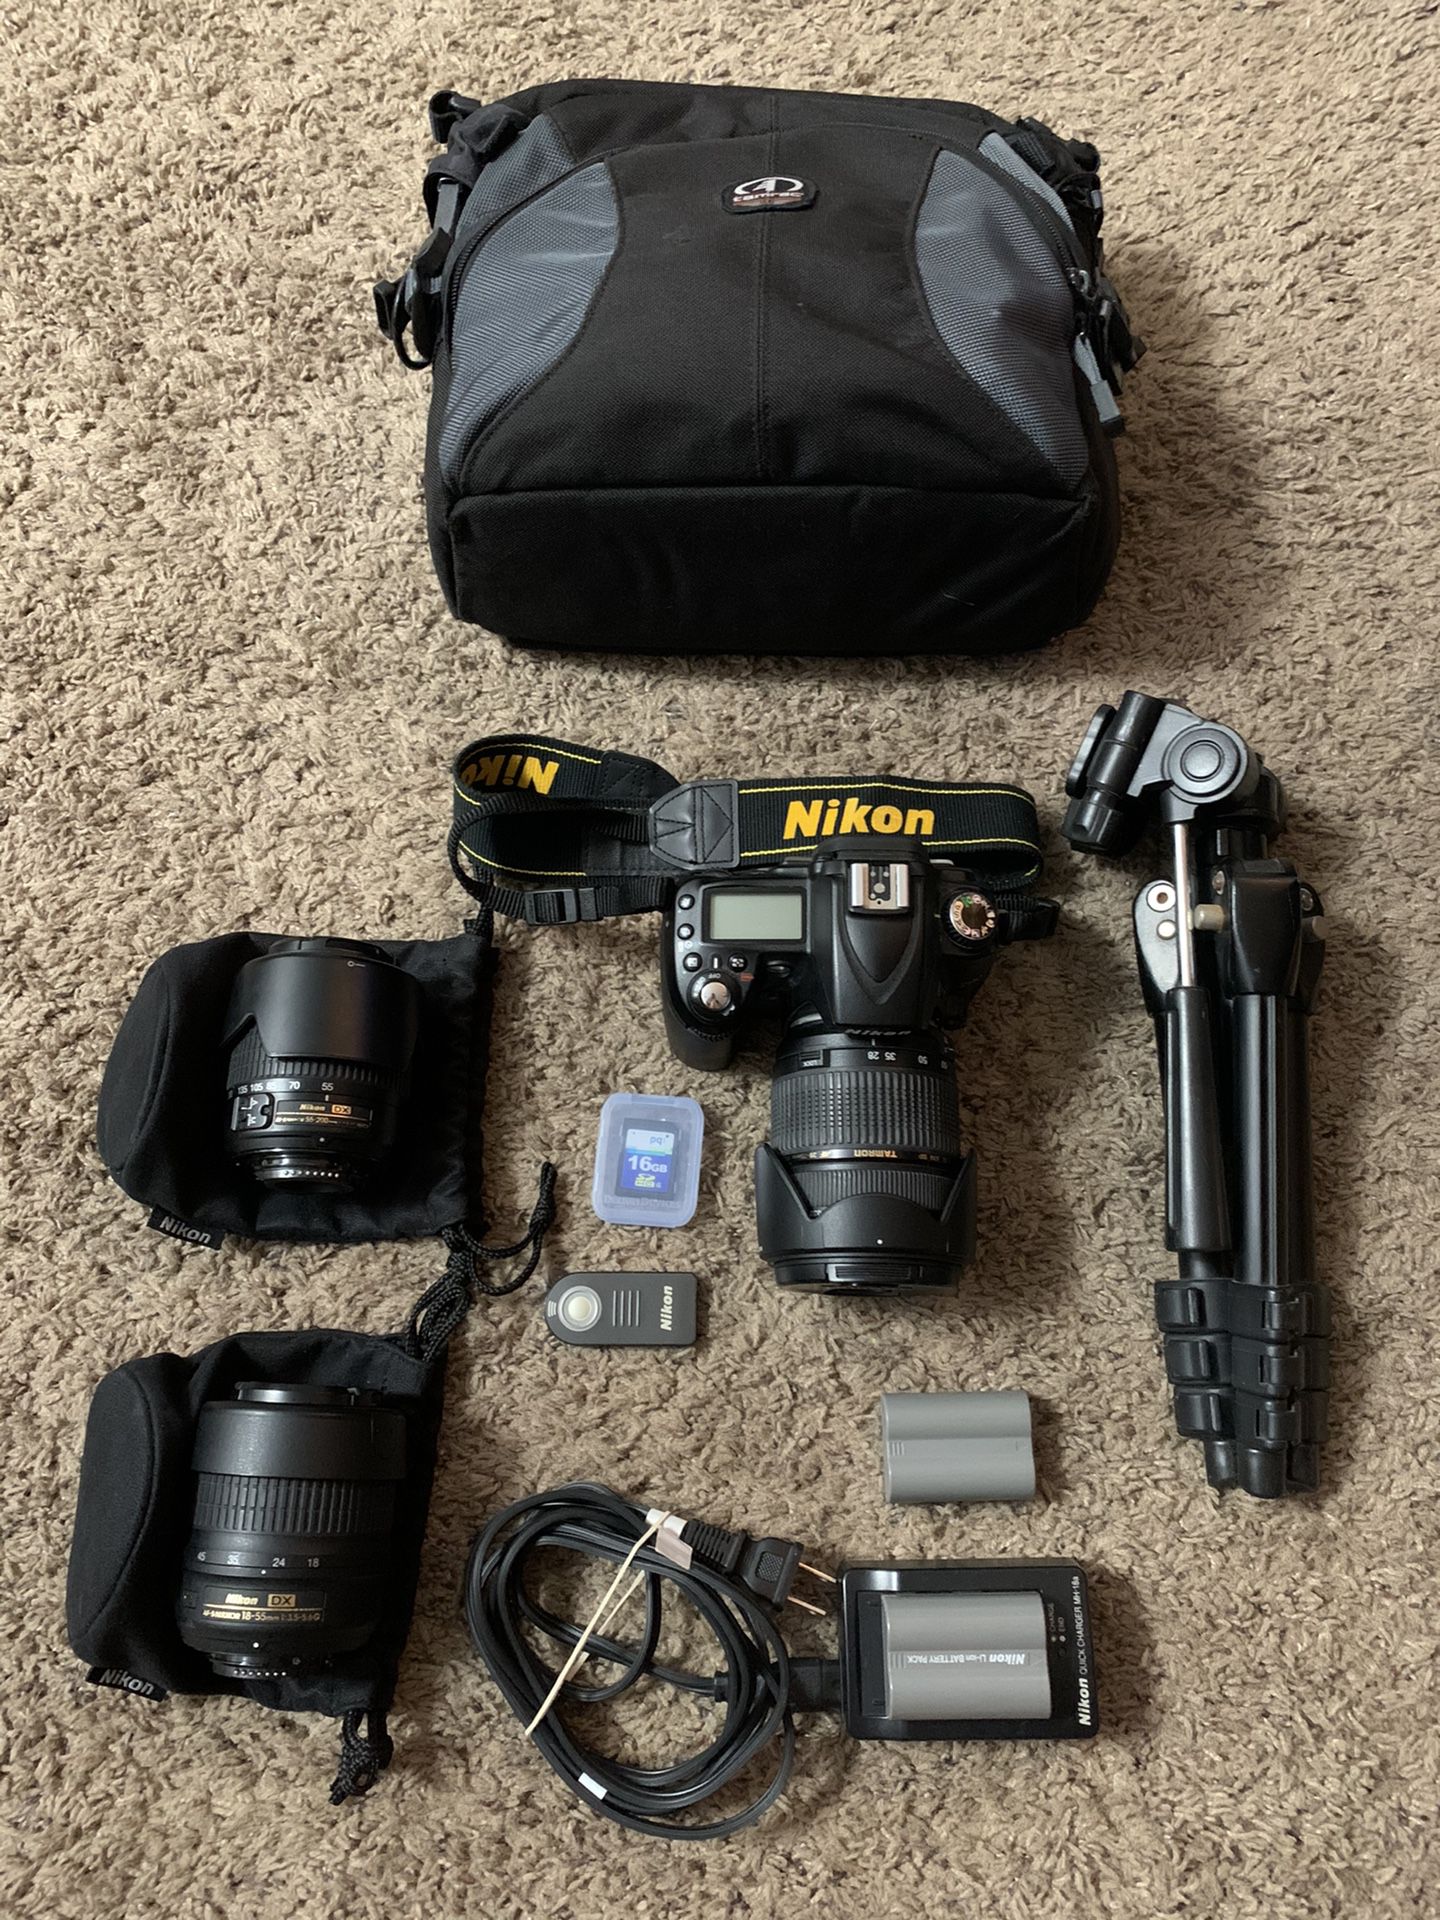 Nikon D90 DSLR Camera with (2) lenses, extra battery, tripod, camera bag and more